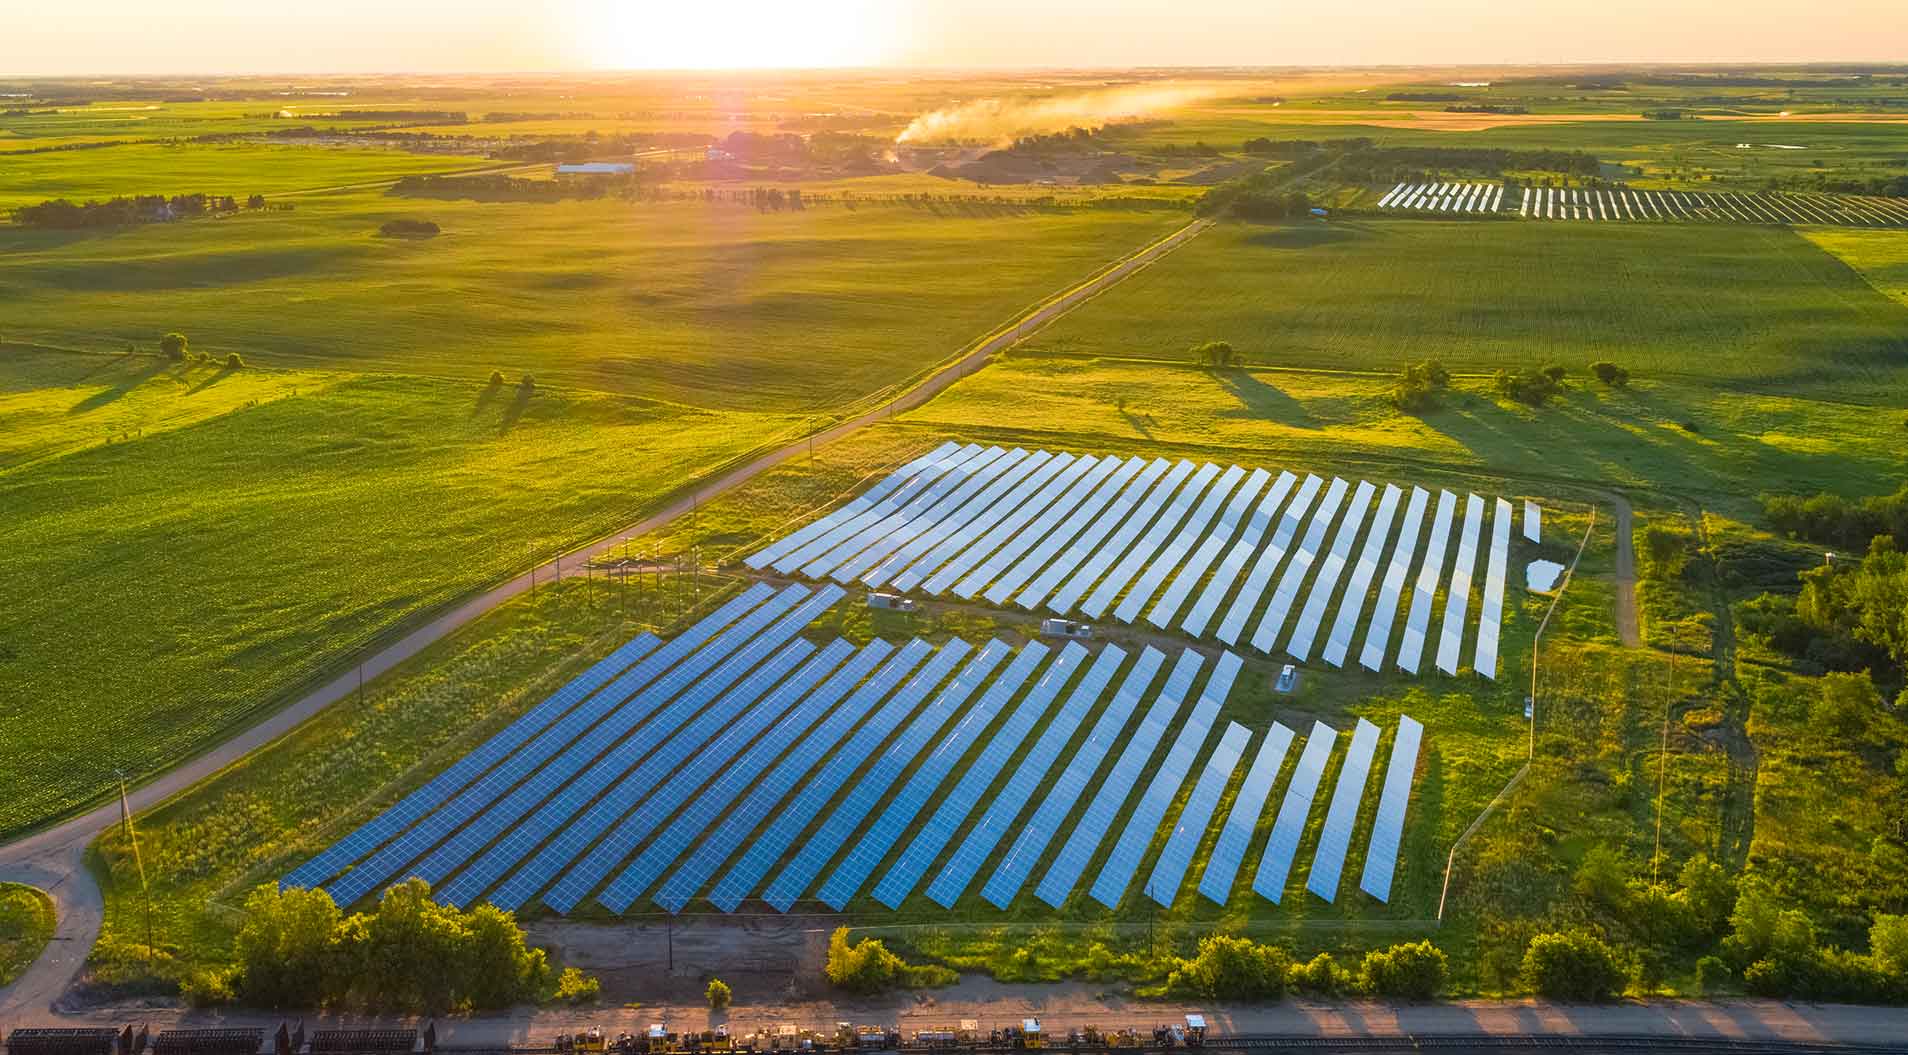 Aerial view of solar panels in a solar farm field